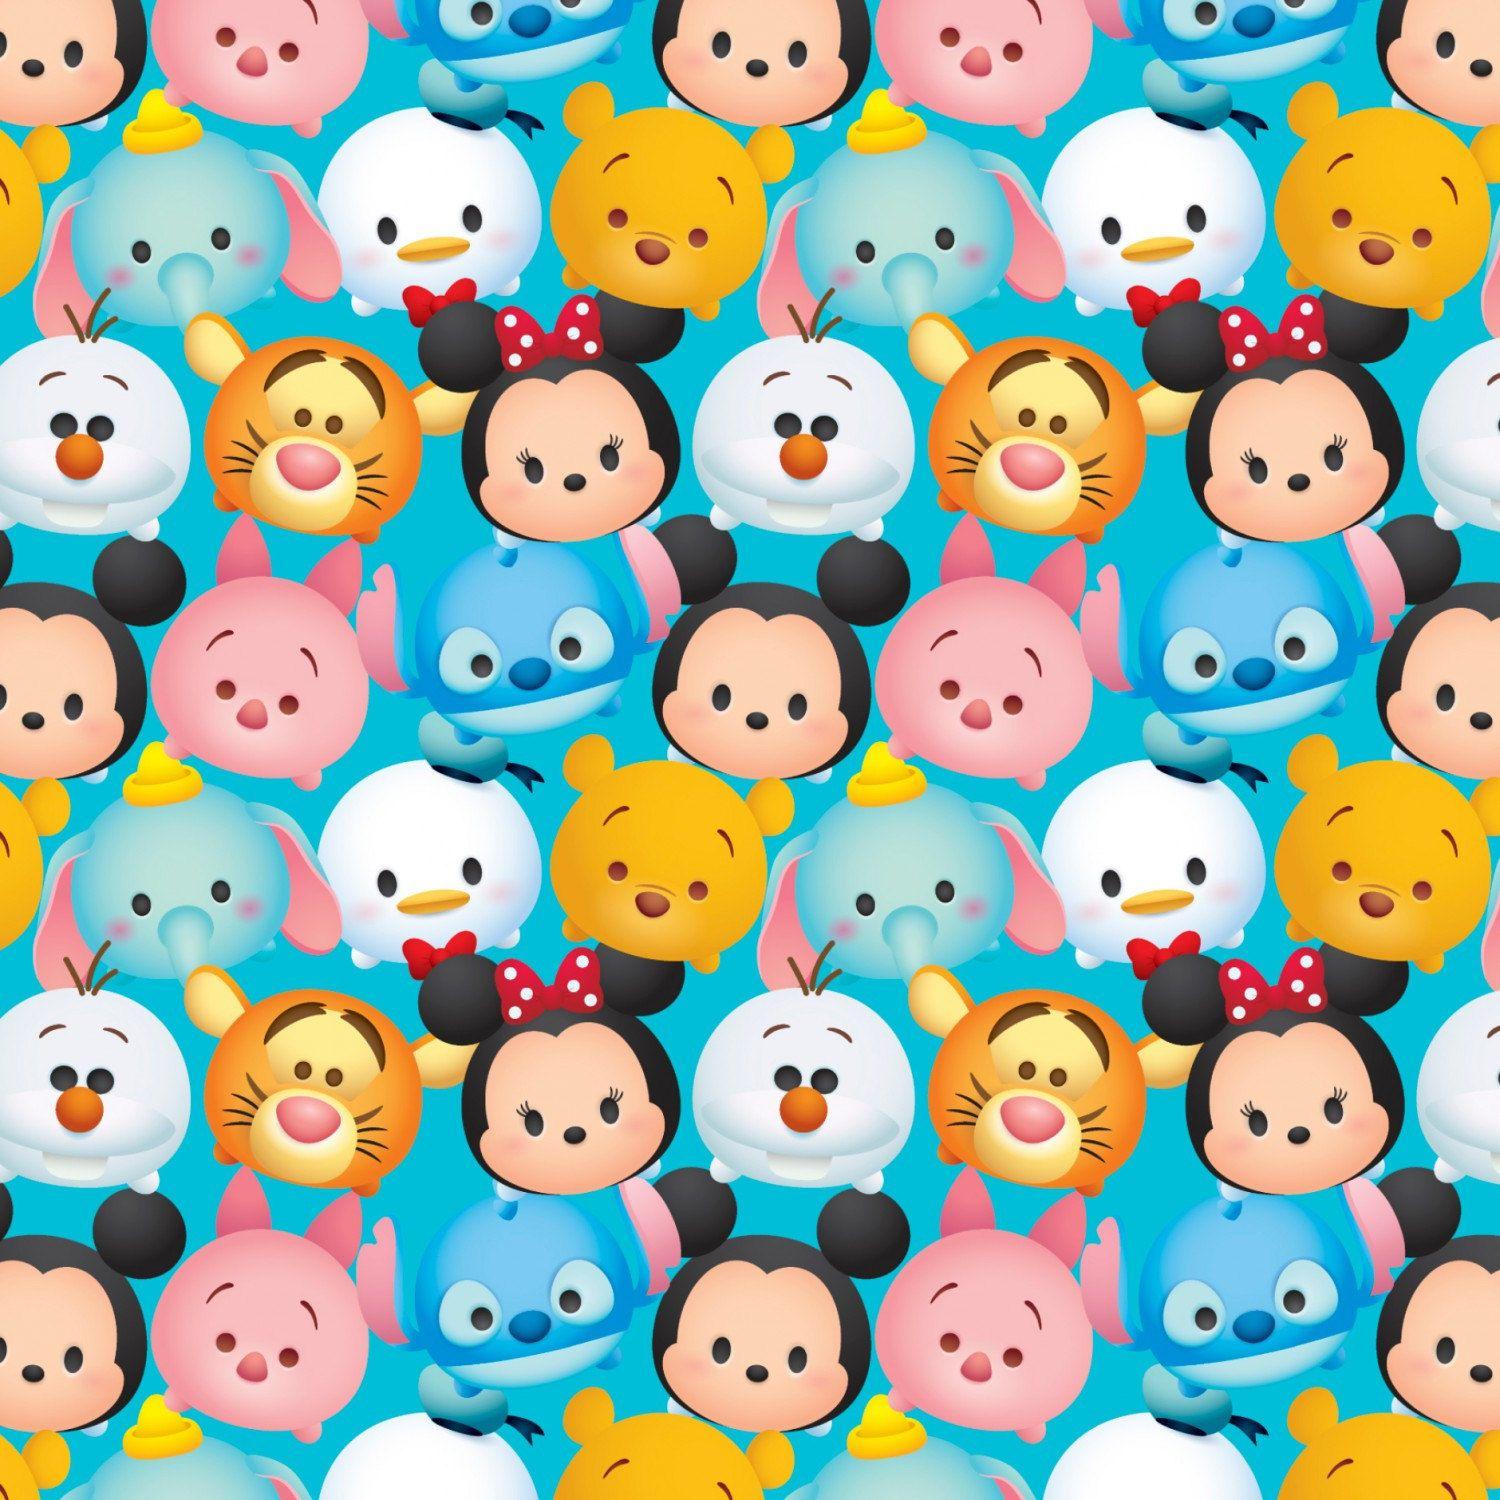 100+] Disney Tsum Tsum Wallpapers on